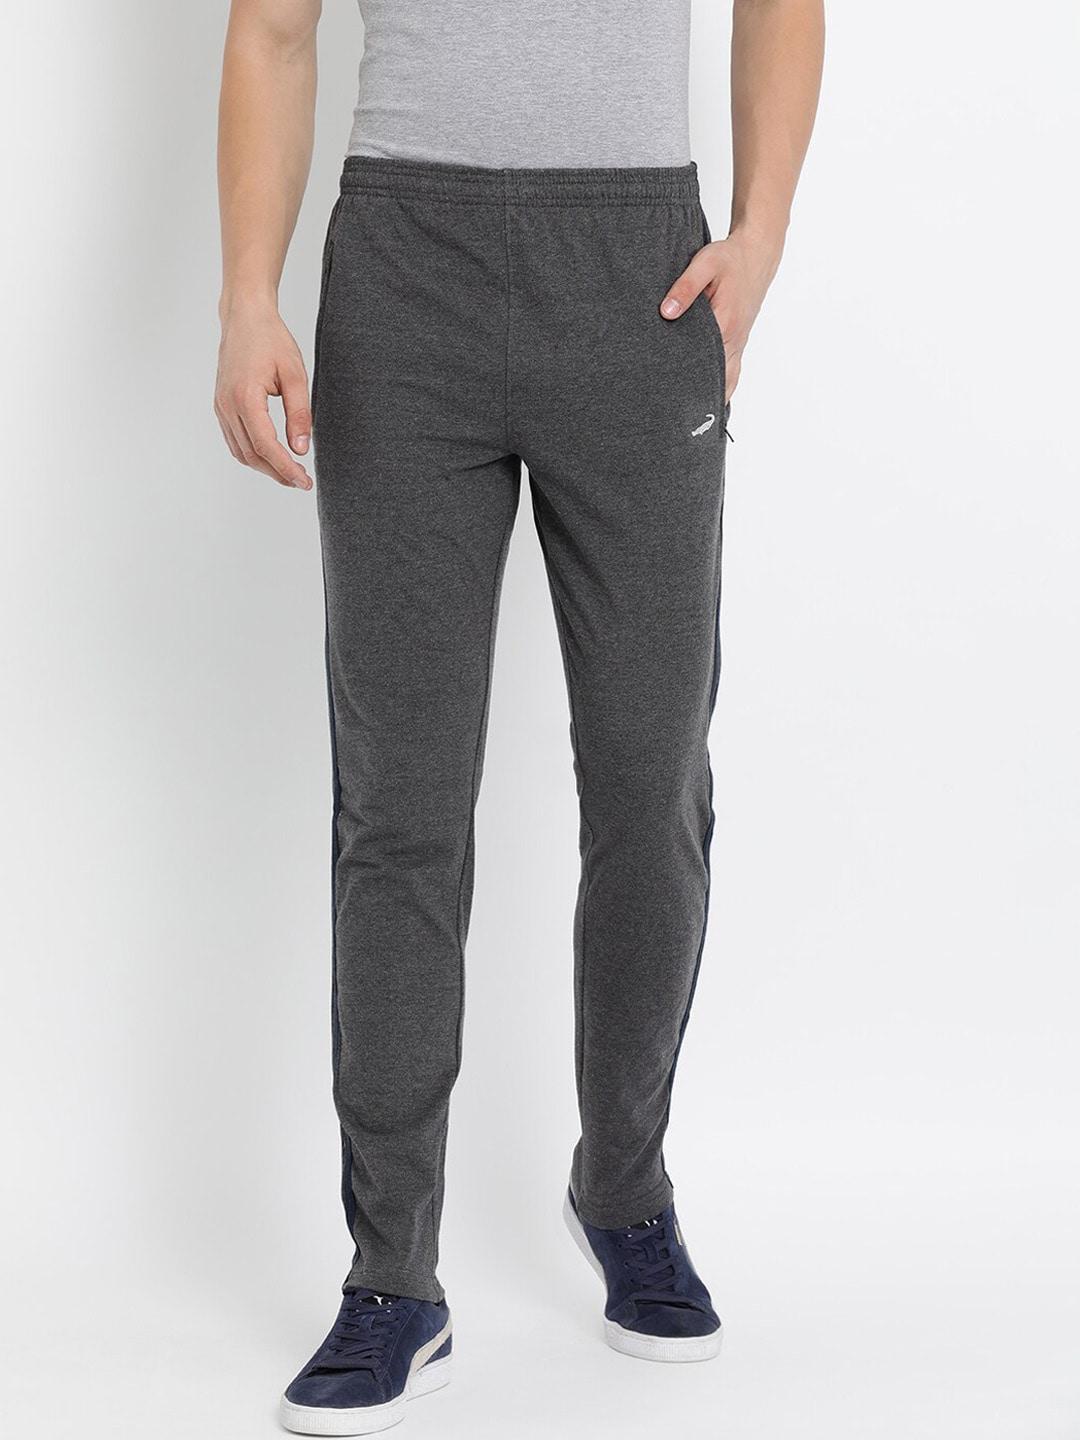 crocodile-men-charcoal-grey-solid-slim-fit-cotton-track-pants